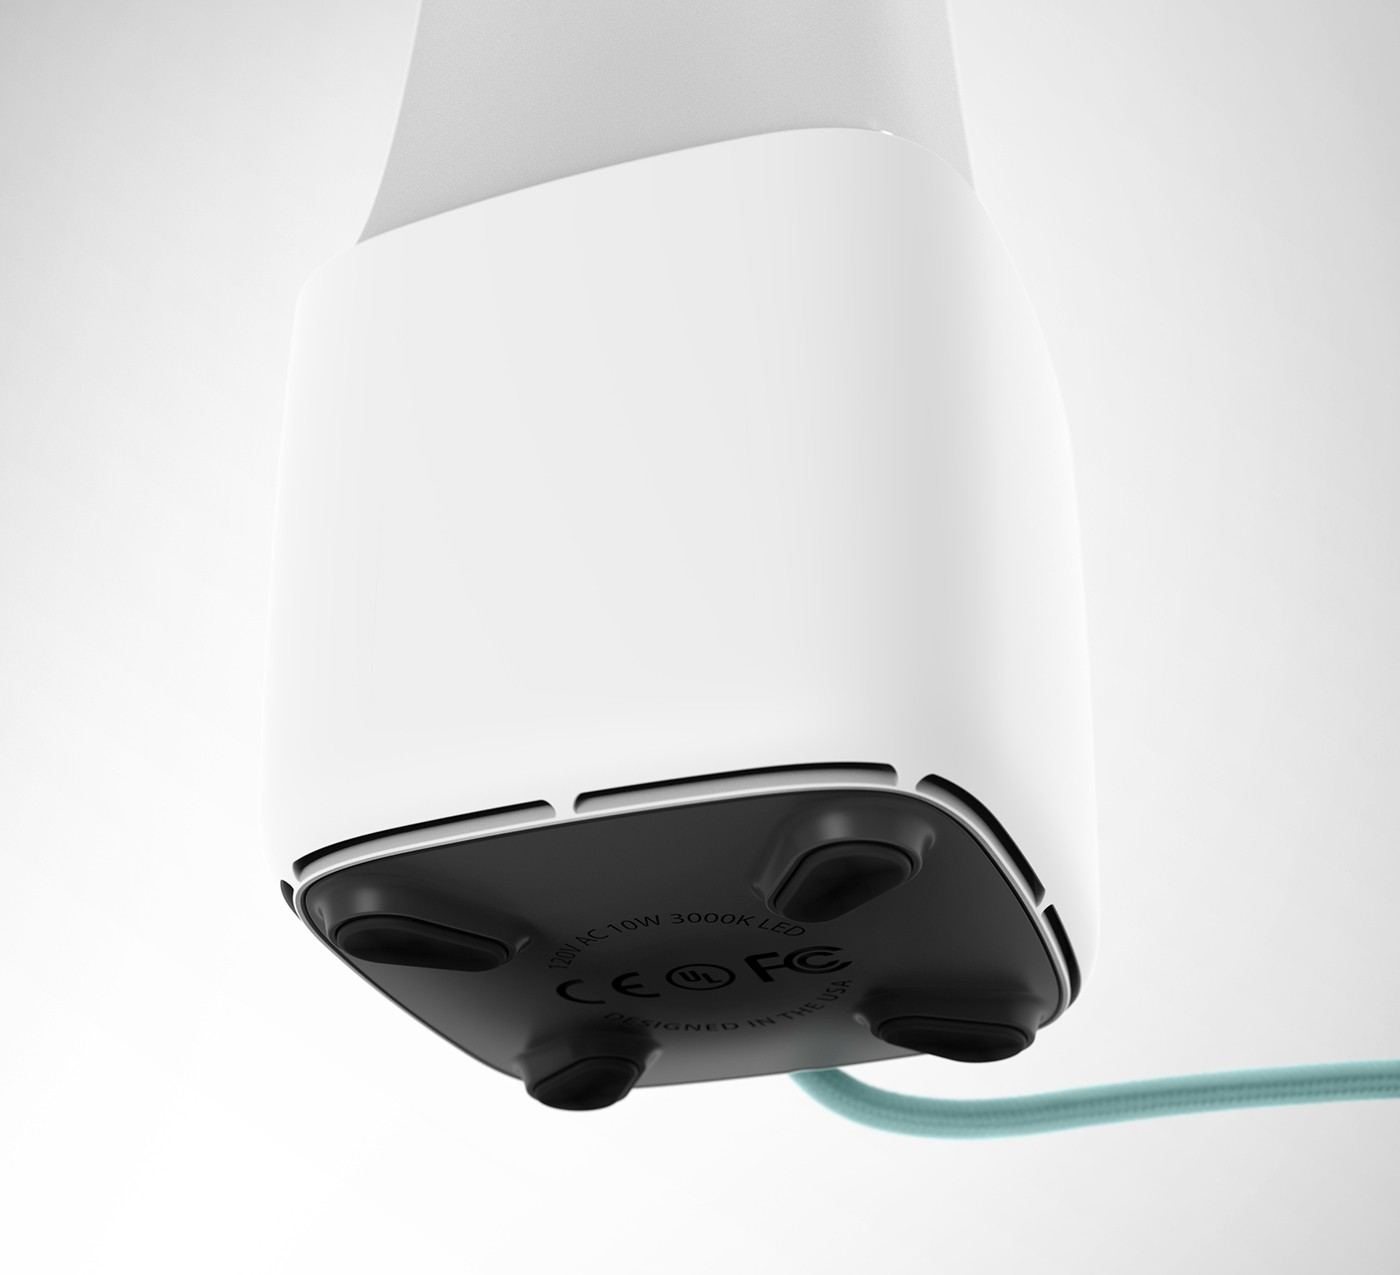 Lamp light bright touch desk bulb bedside dimmer DIM Smart